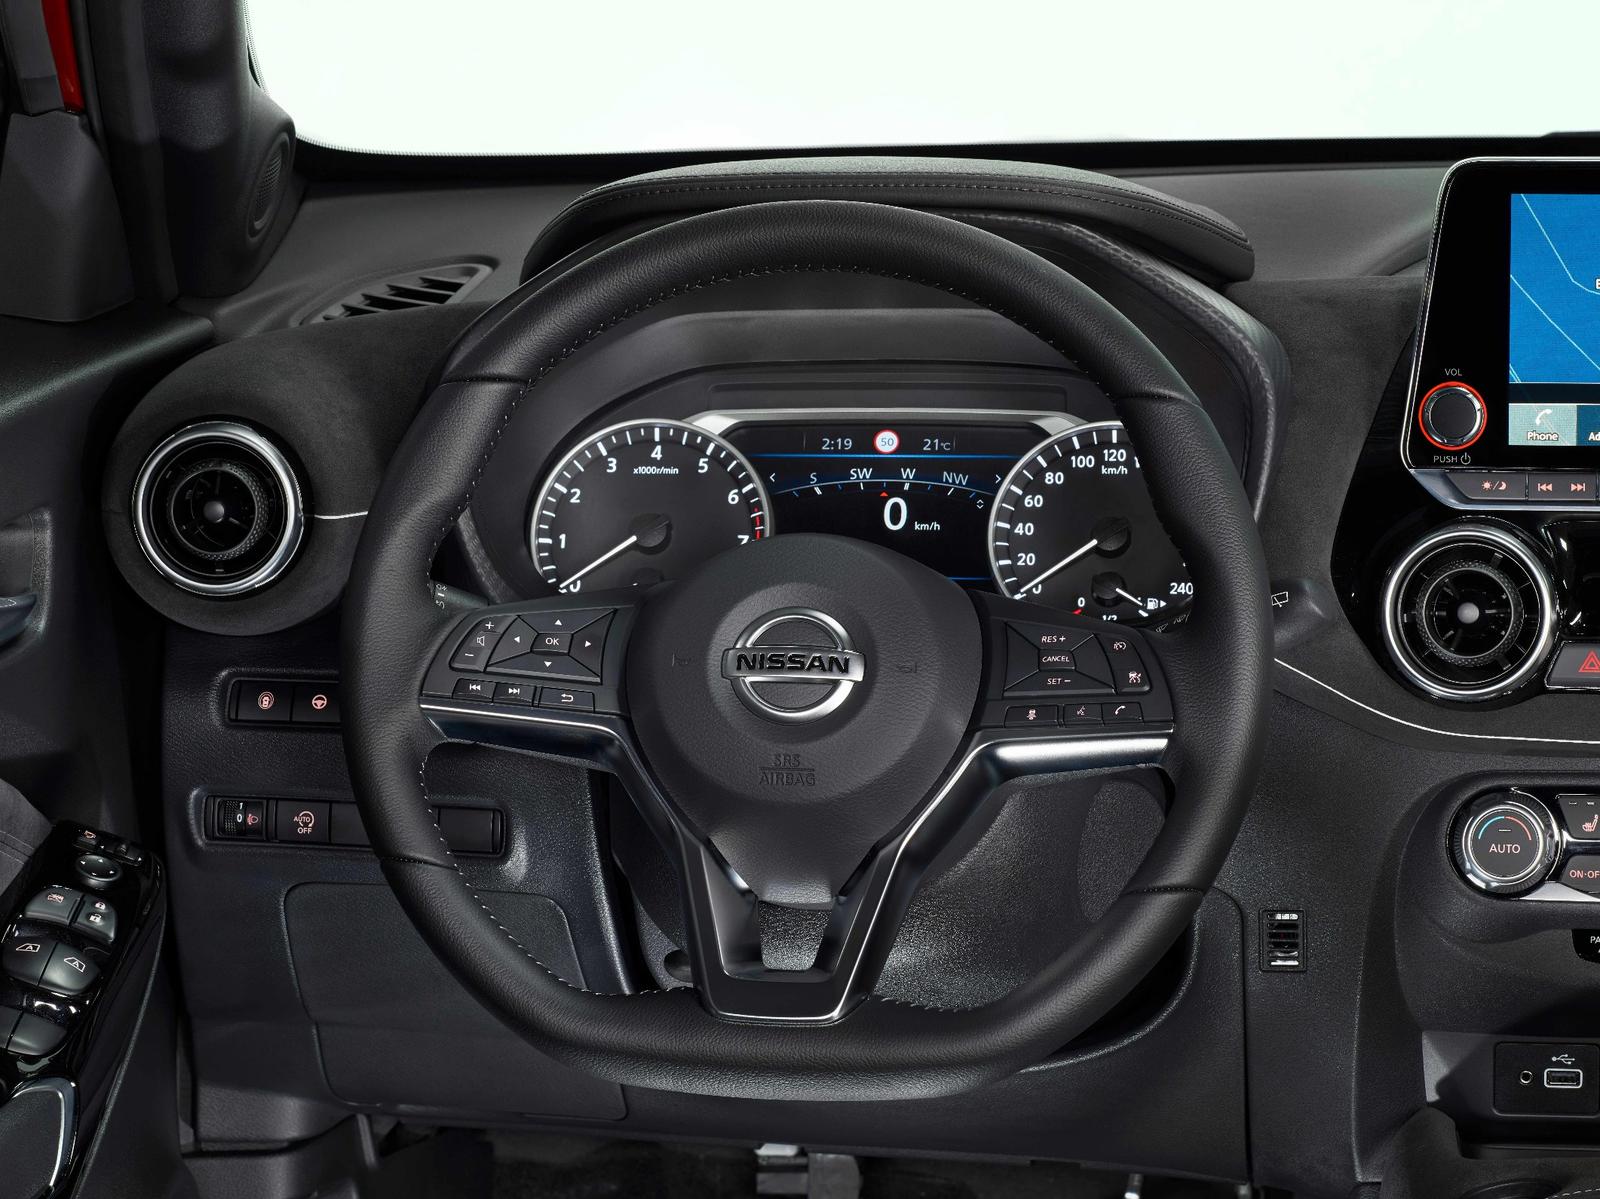 Oct. 7 – 2pm CET – New Nissan JUKE Interior 03-2122×1590